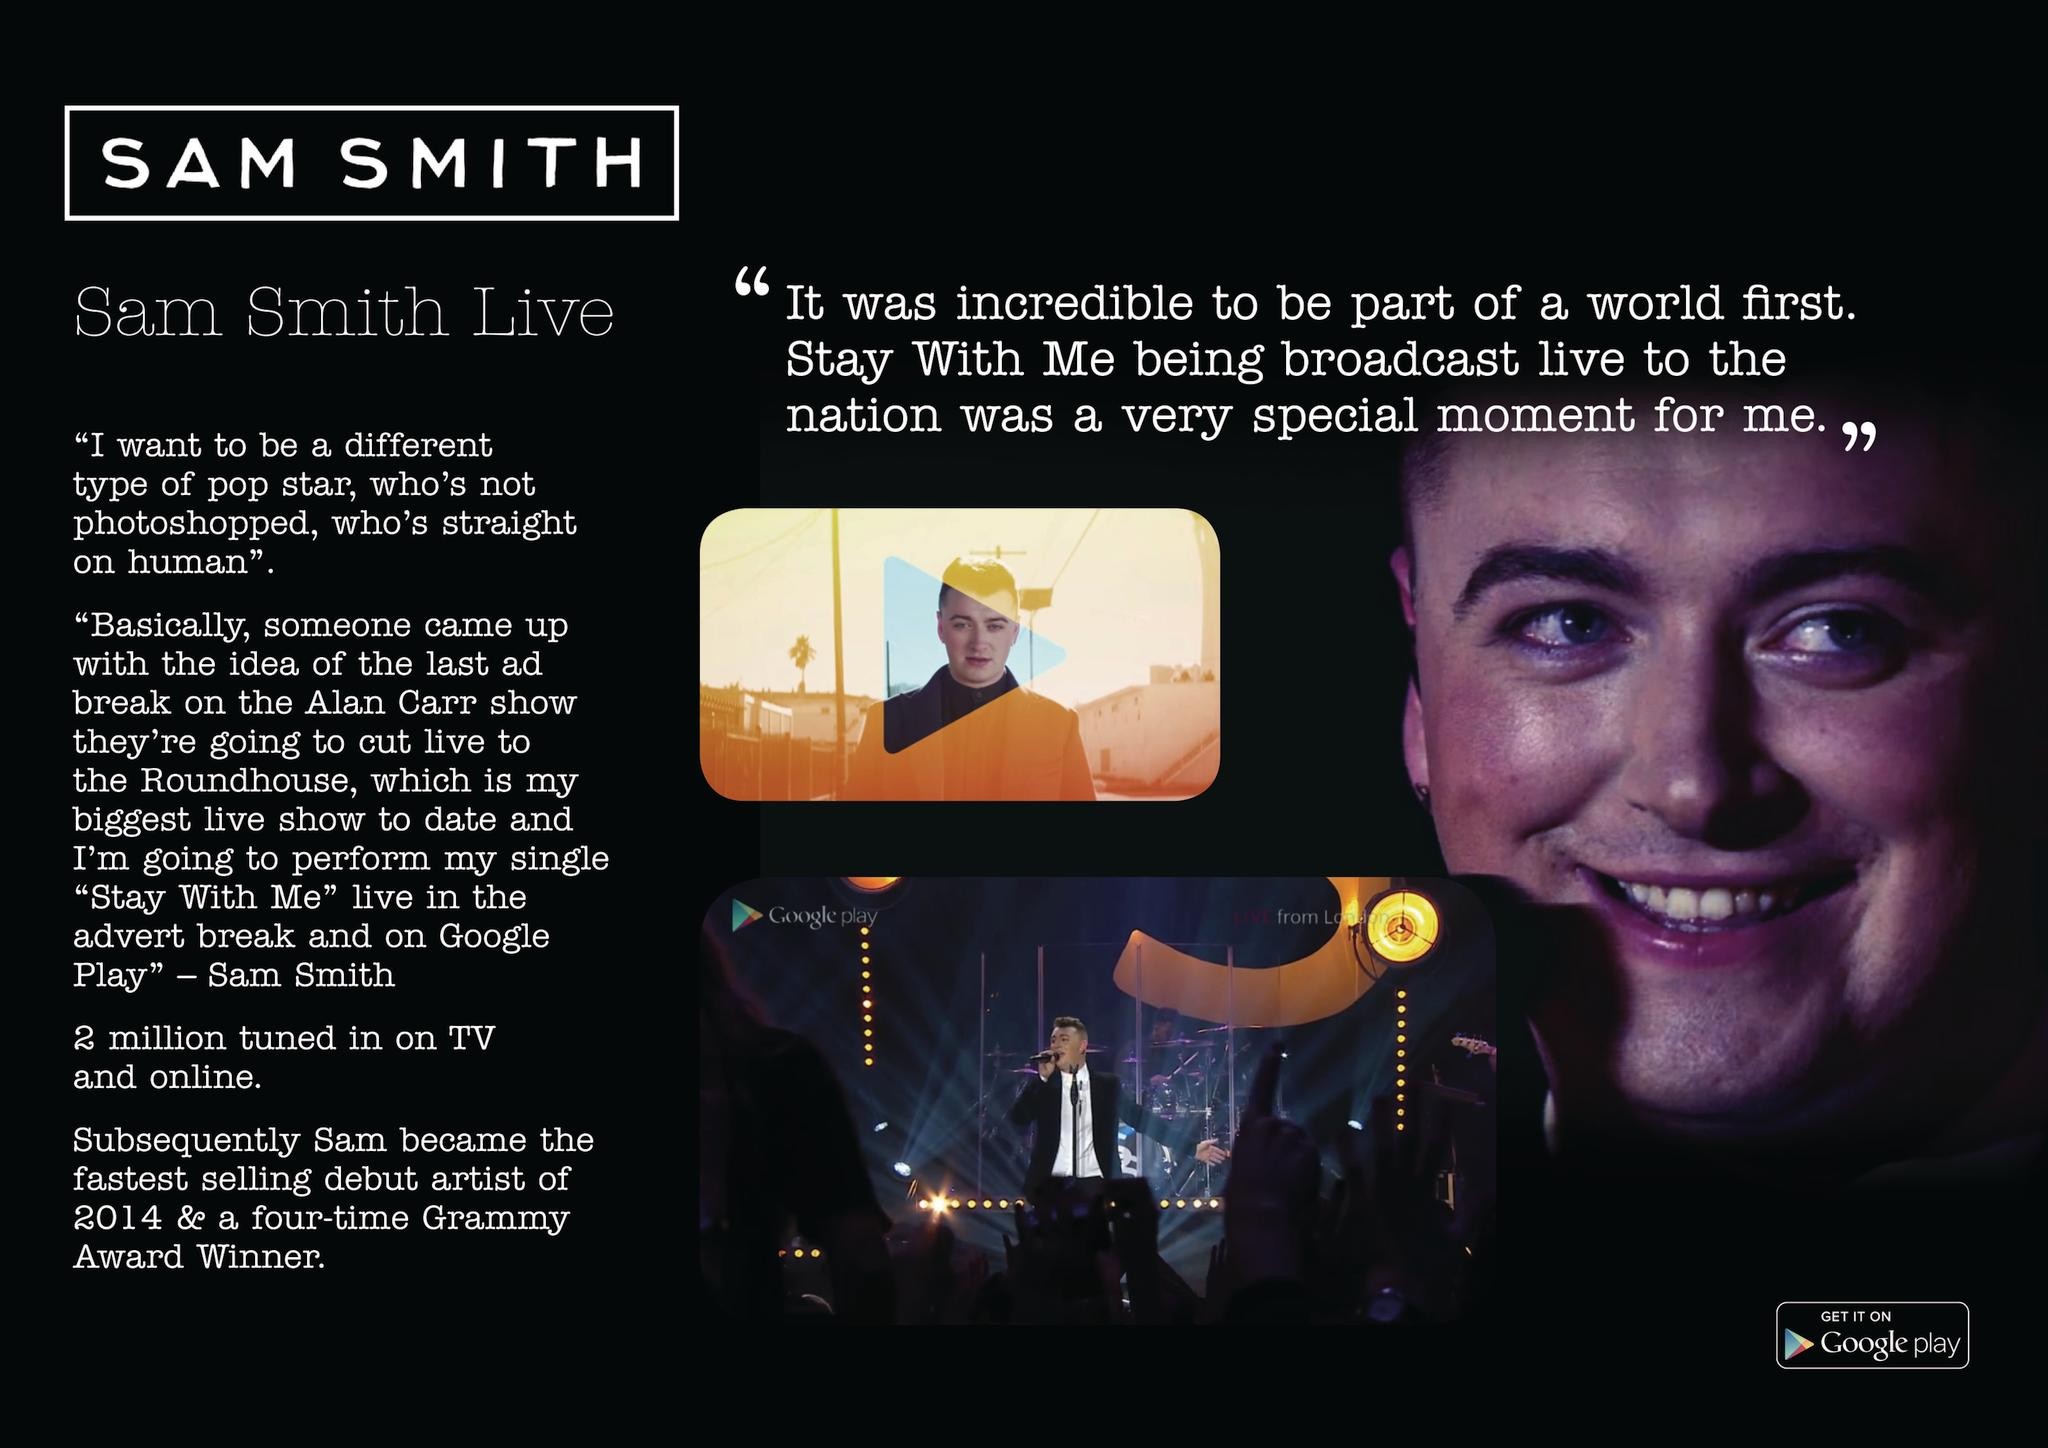 SAM SMITH LIVE